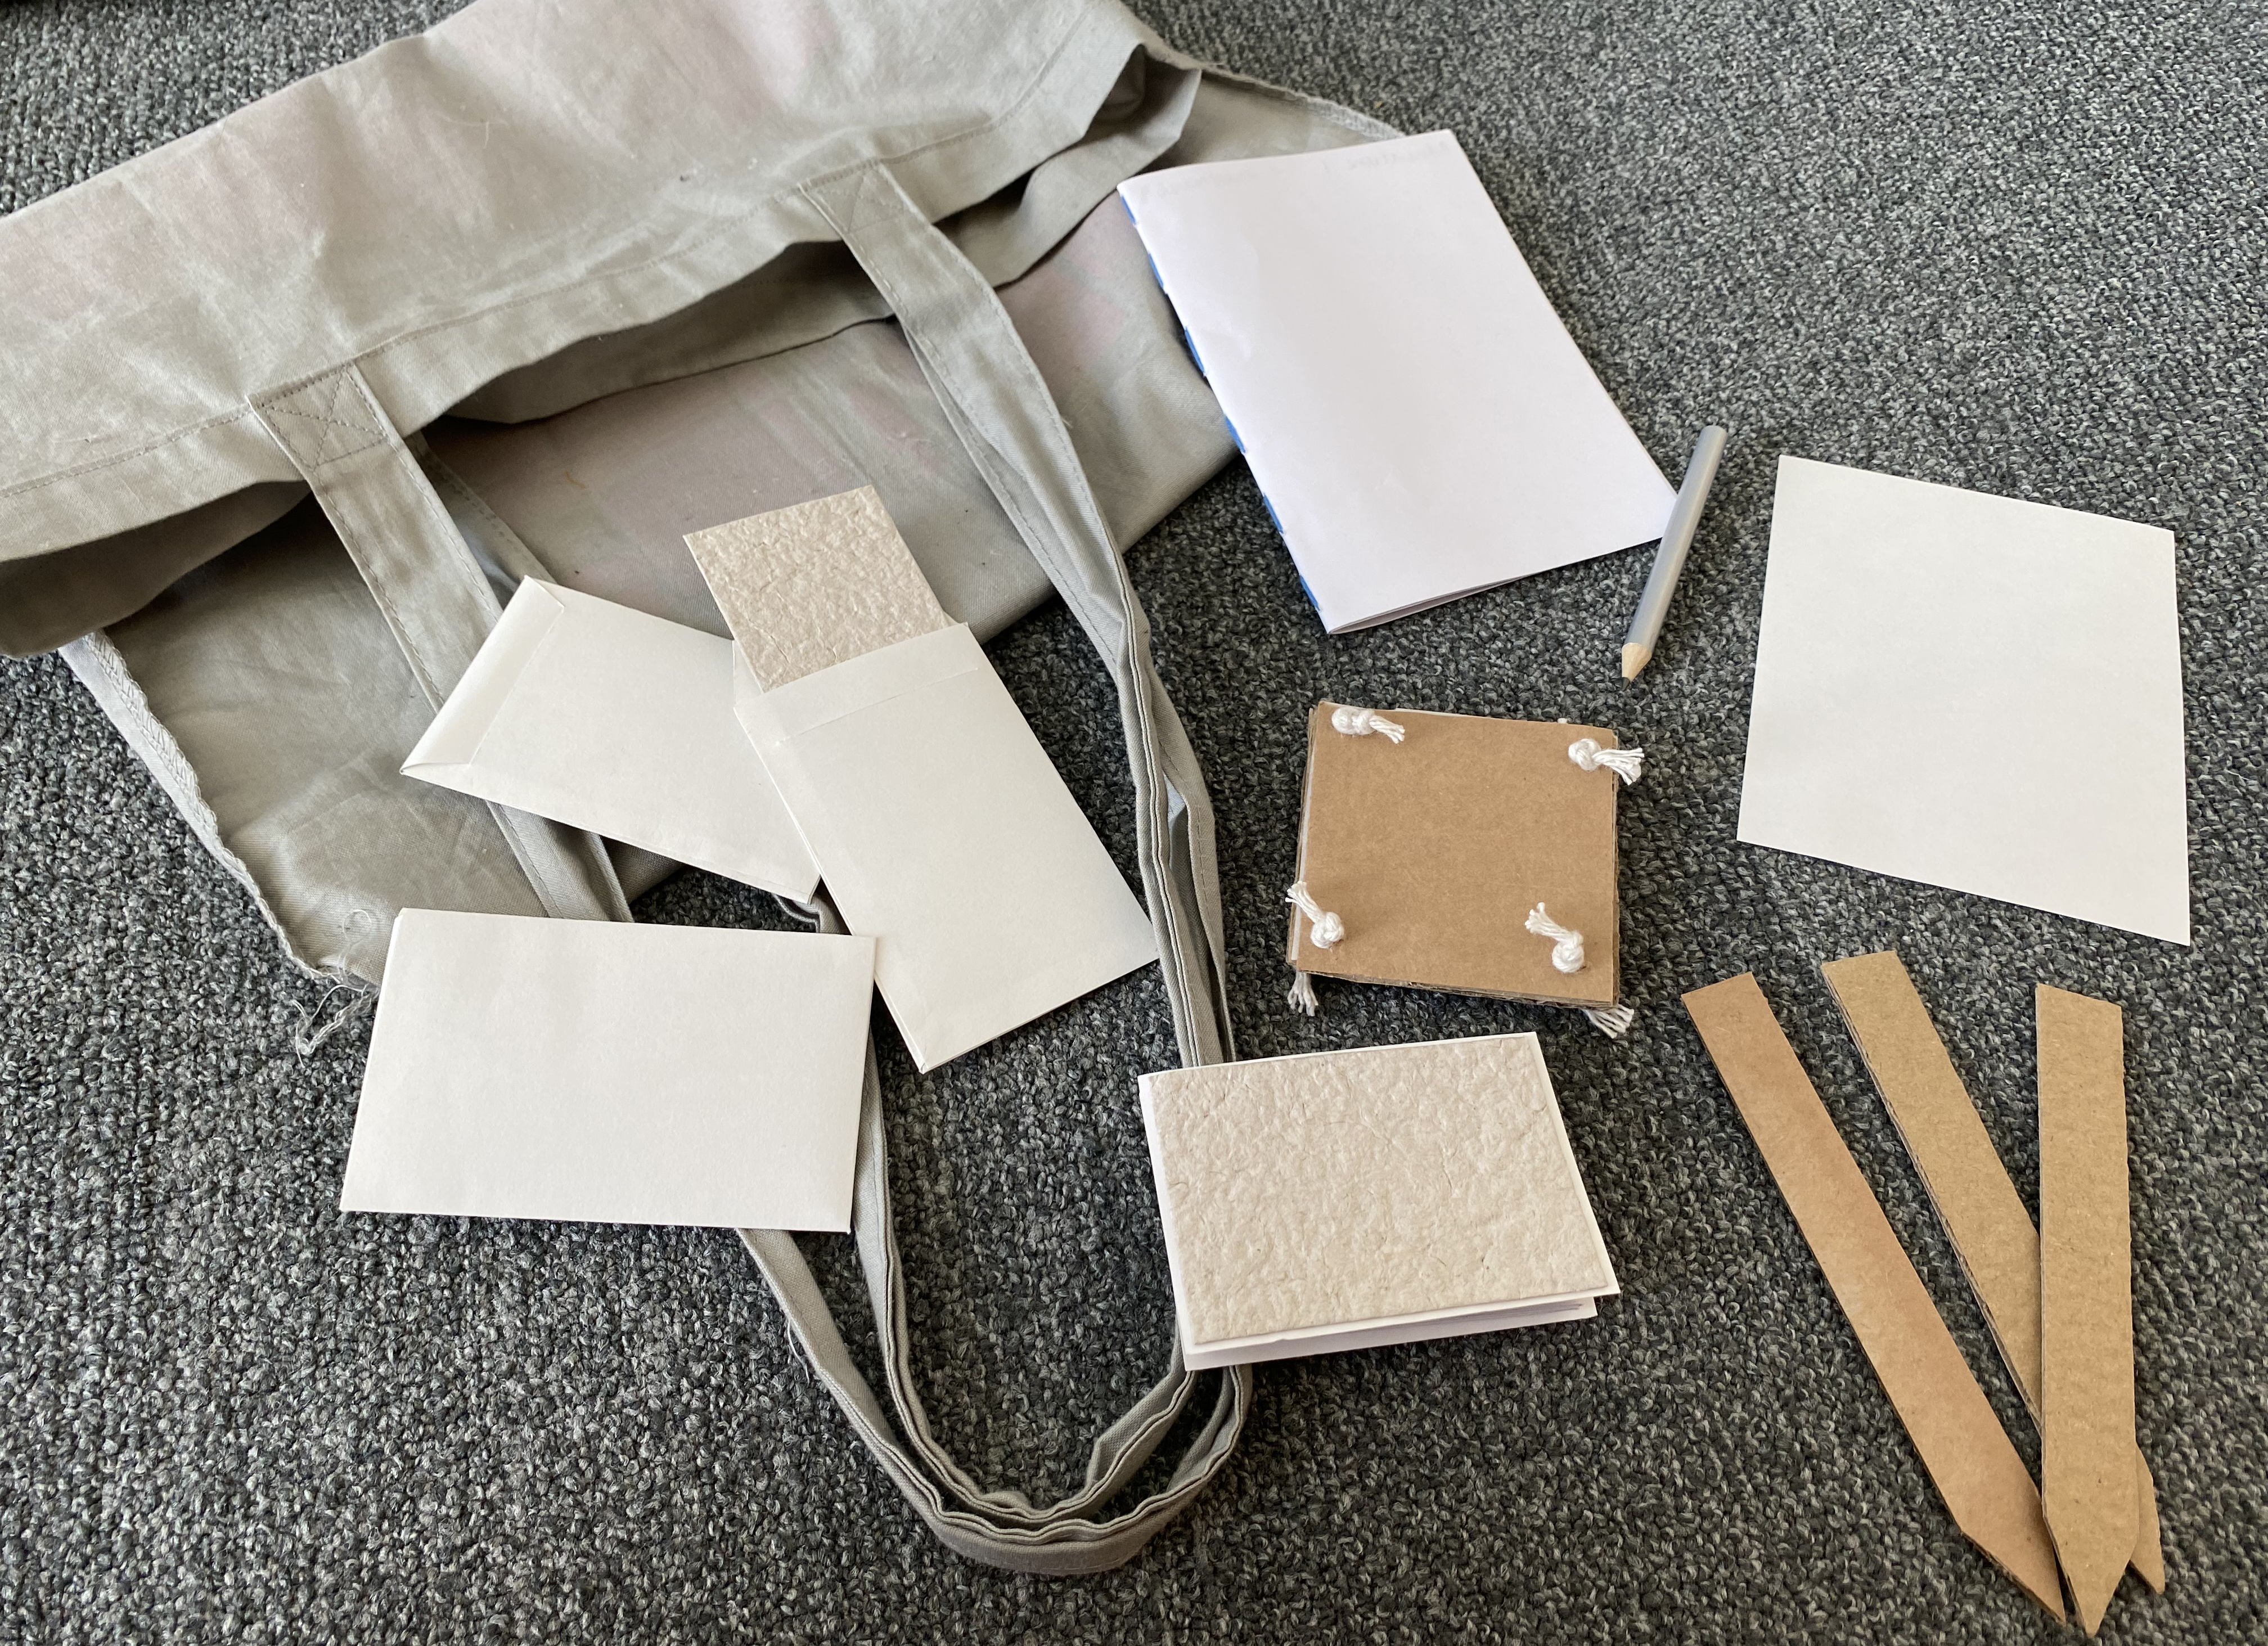 cardboard prototype of toolkit contents